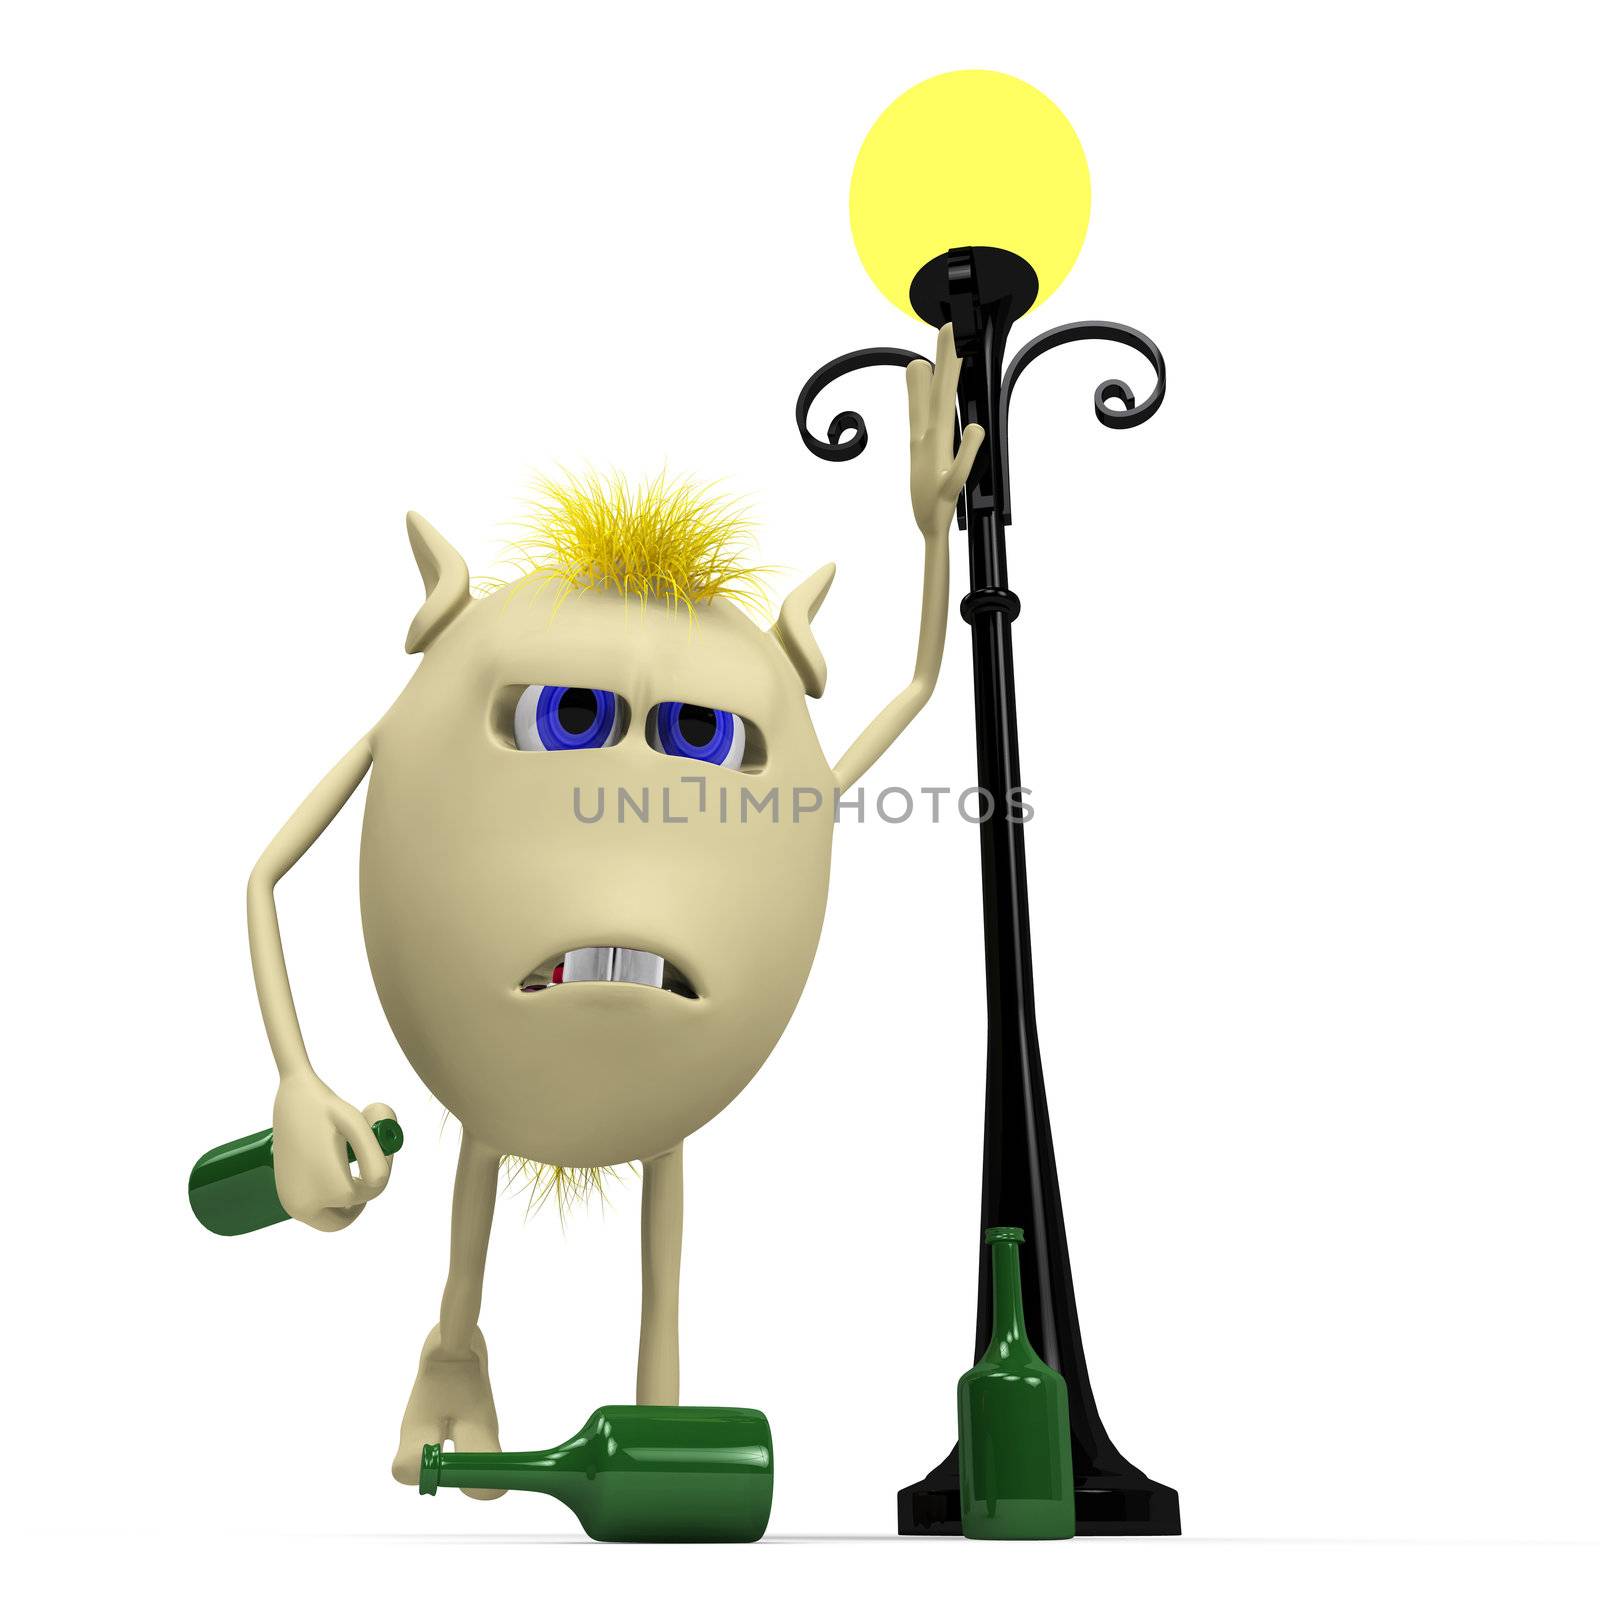 Yellow haired drunkard puppet standing near metal latern